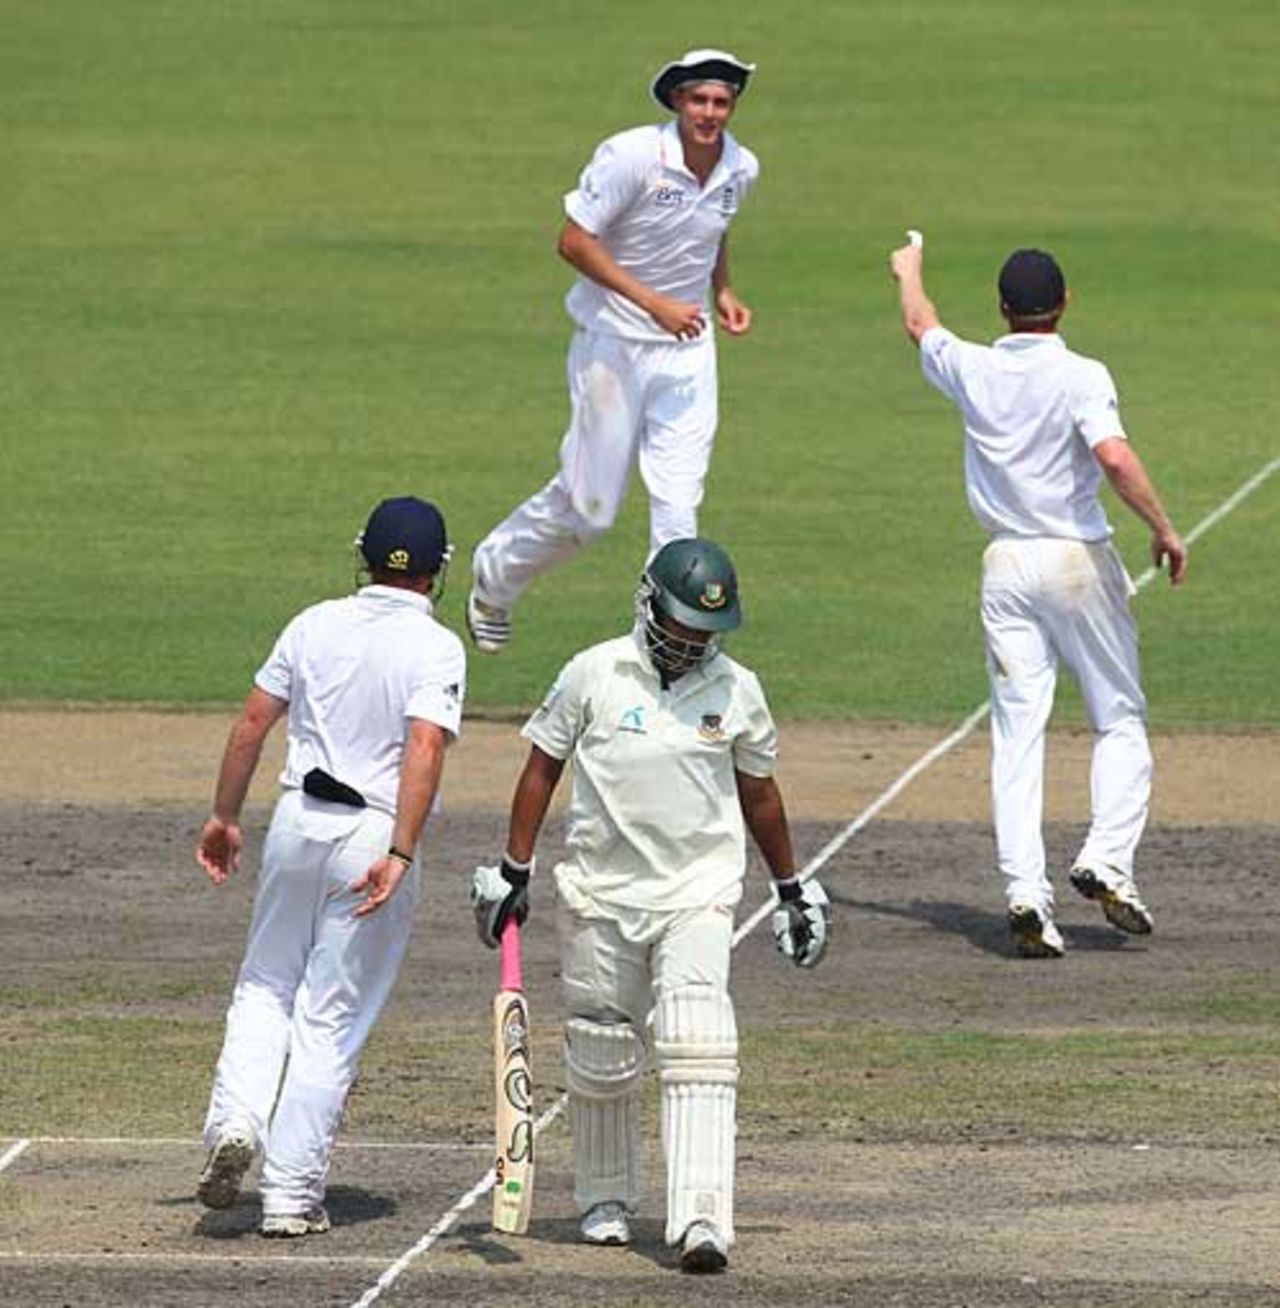 Tamim Iqbal was caught at backward point by Stuart Broad, Bangladesh v England, 2nd Test, Dhaka, March 23, 2010